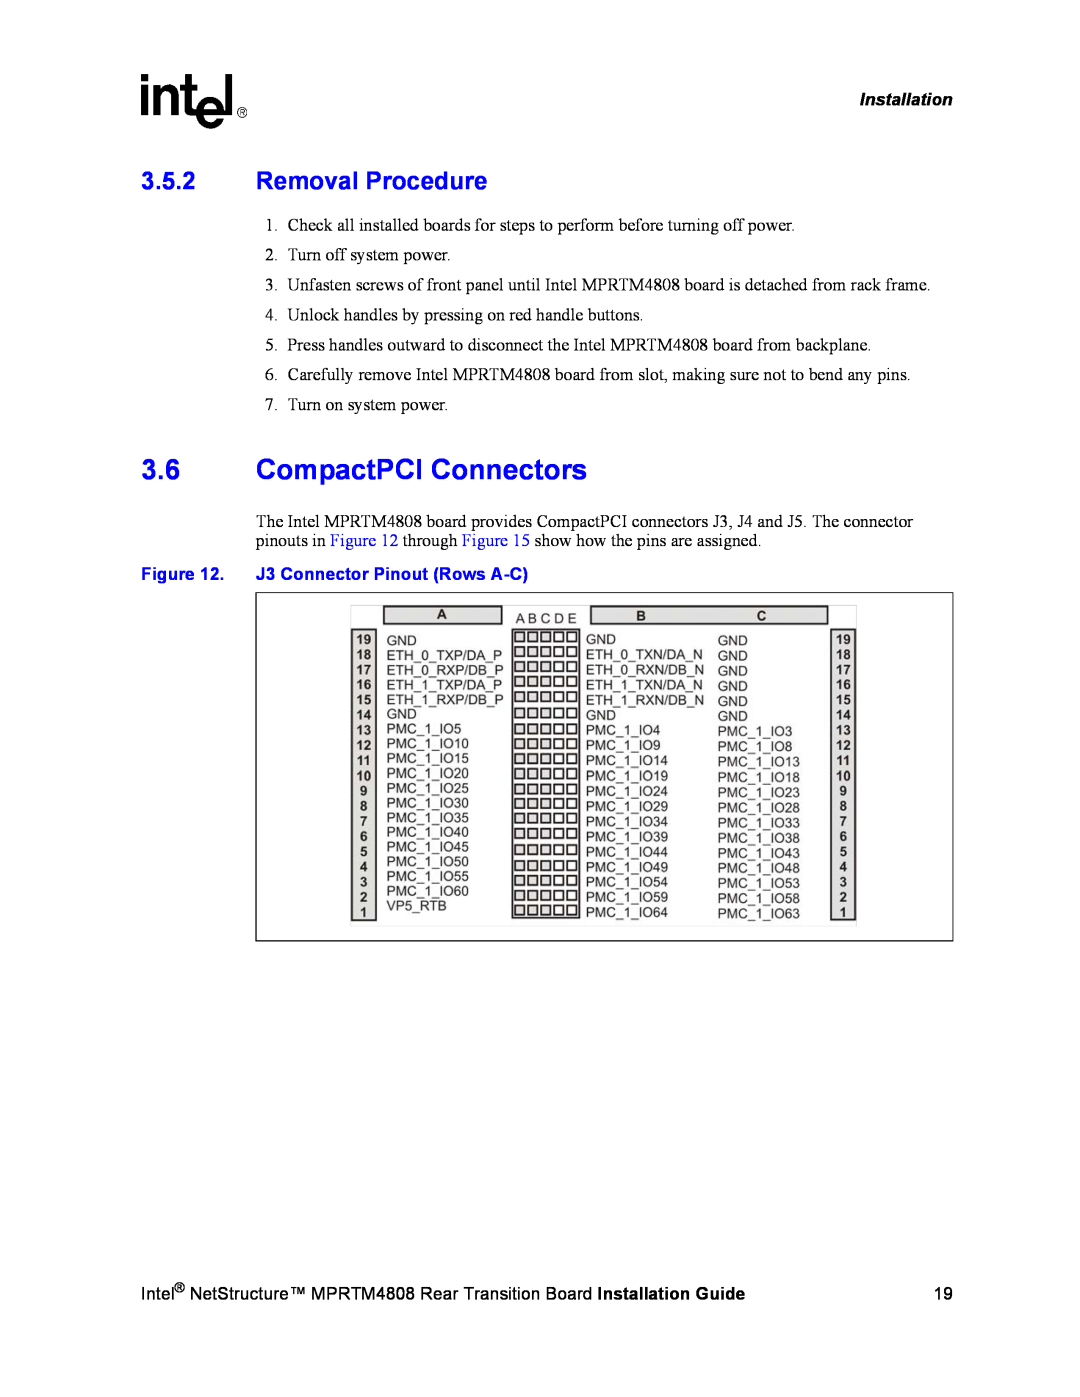 Intel MPRTM4808 manual 3.6CompactPCI Connectors, 3.5.2Removal Procedure, J3 Connector Pinout Rows A-C, Installation 